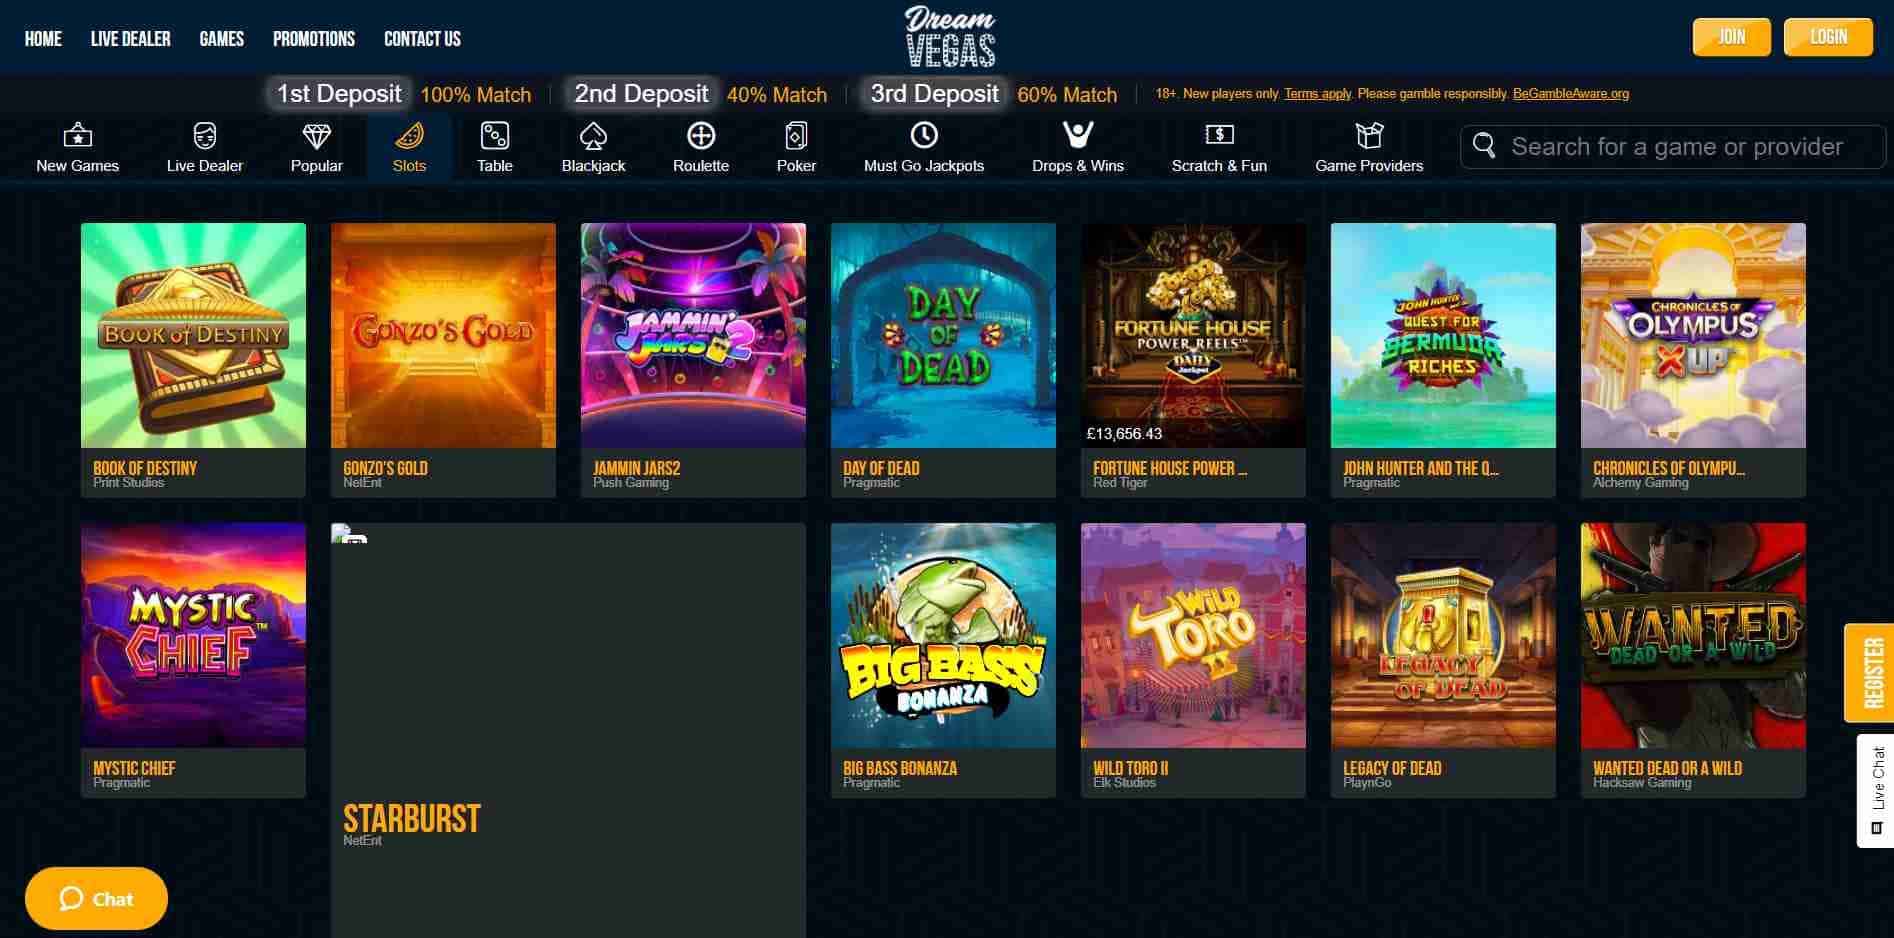 Dream Vegas Slots page